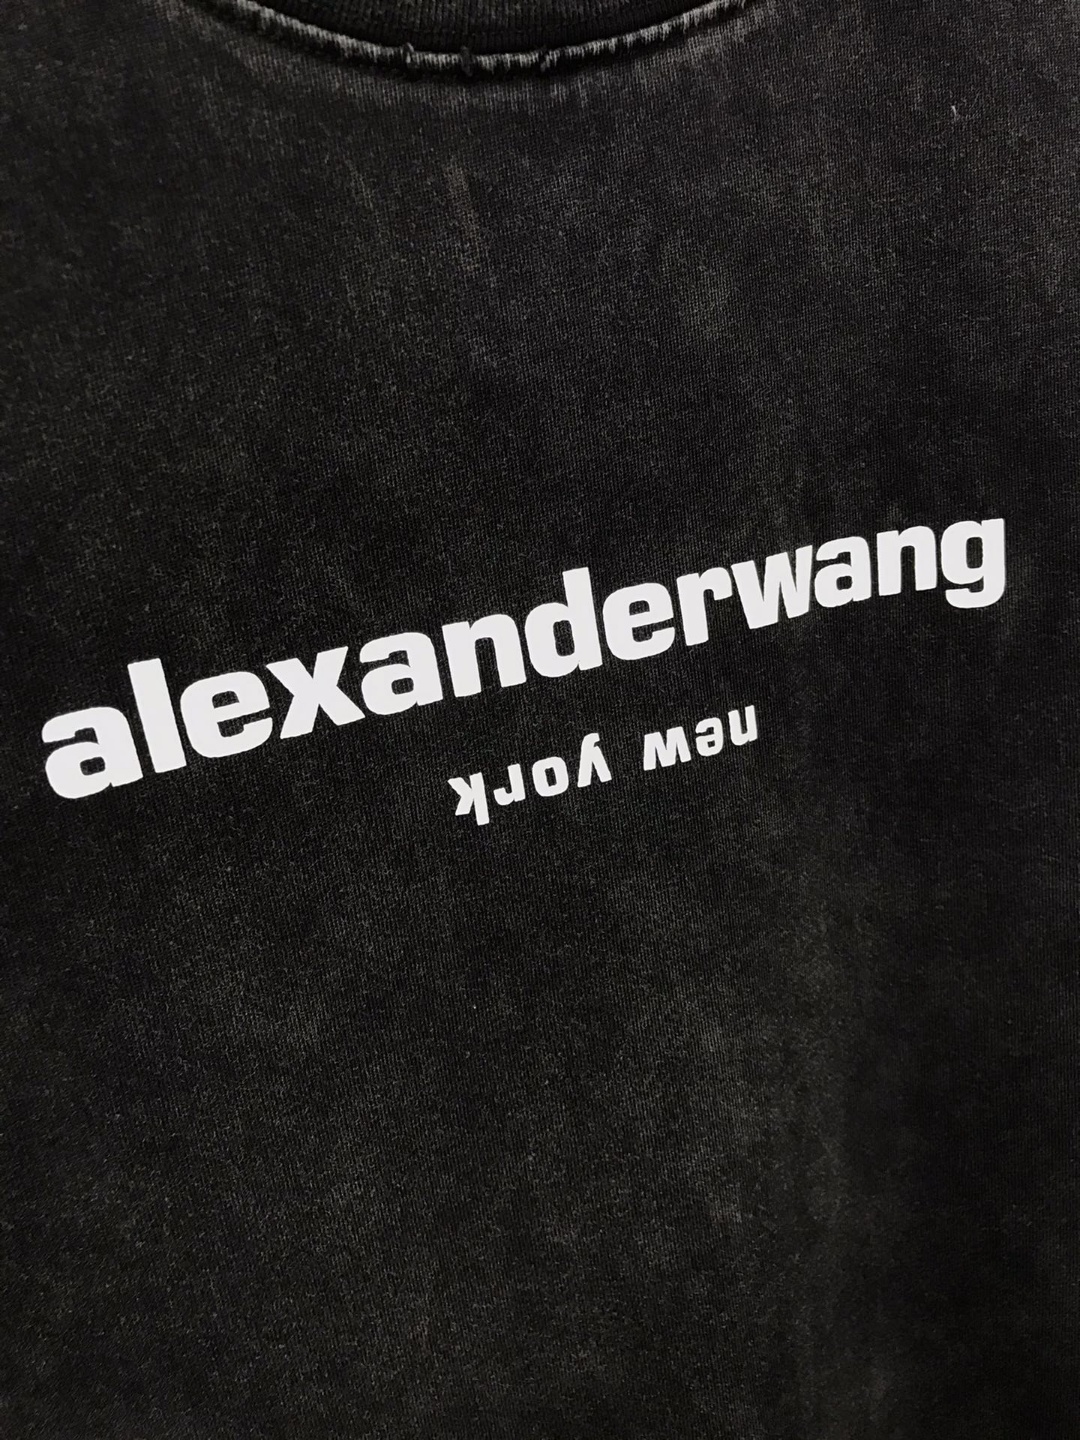 ALEXANDER WANG 알렉산더 왕 워싱 저지 로고 티셔츠 (남녀공용)